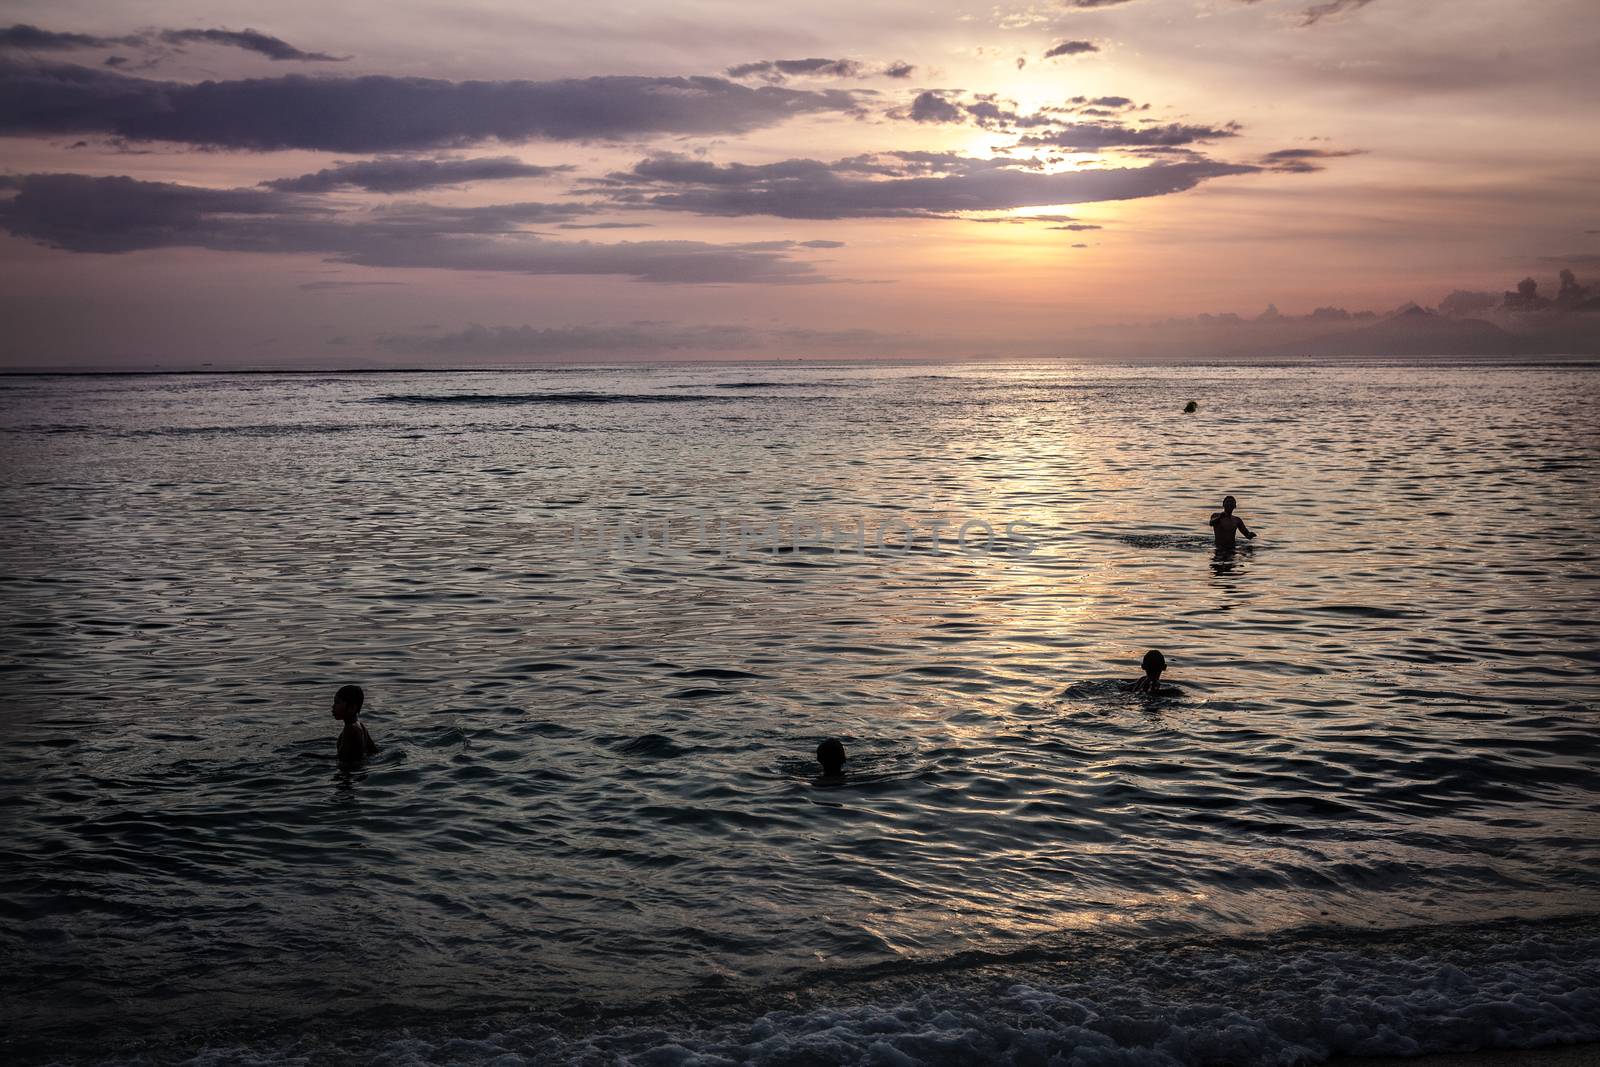 Children swim in the ocean evening sunset  by fotoru